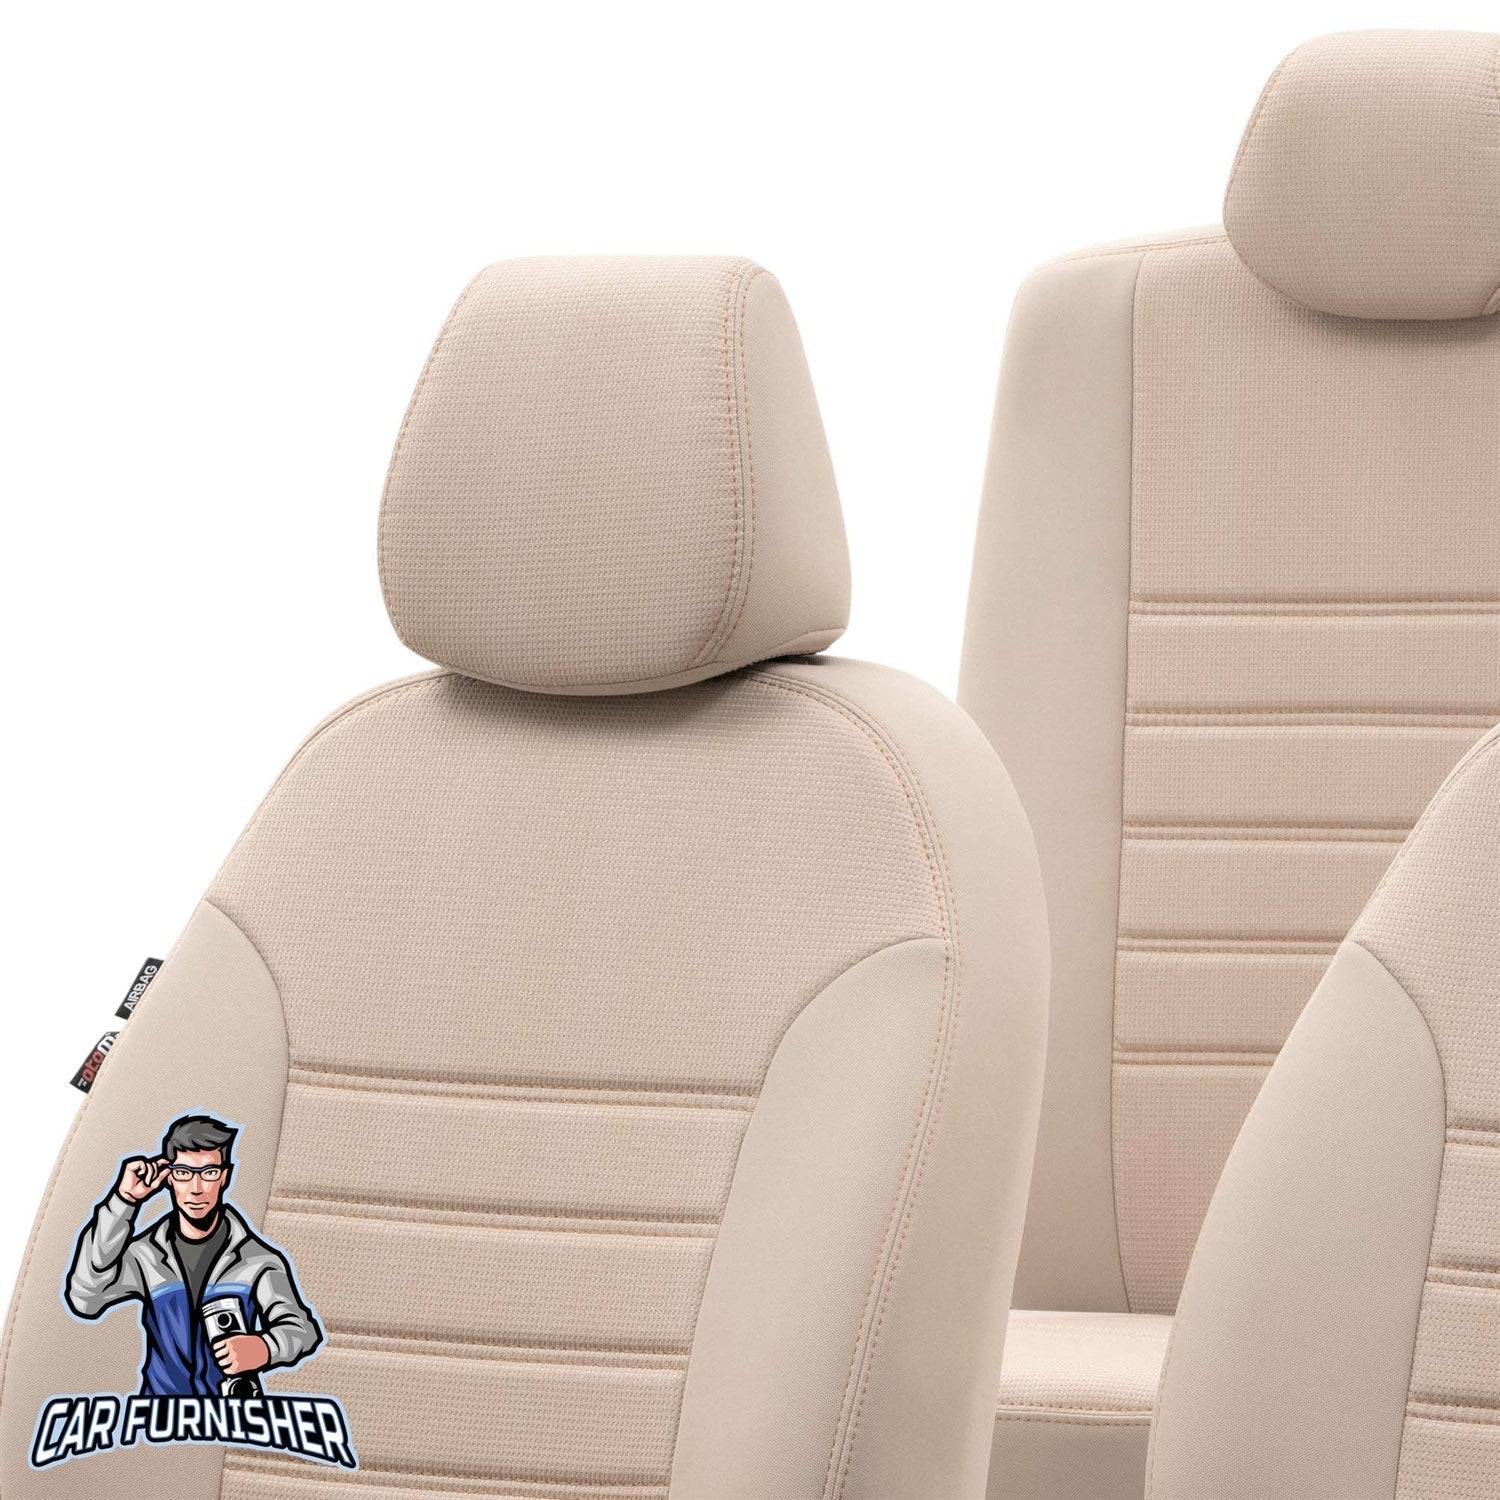 Honda HRV Seat Covers Original Jacquard Design Beige Jacquard Fabric